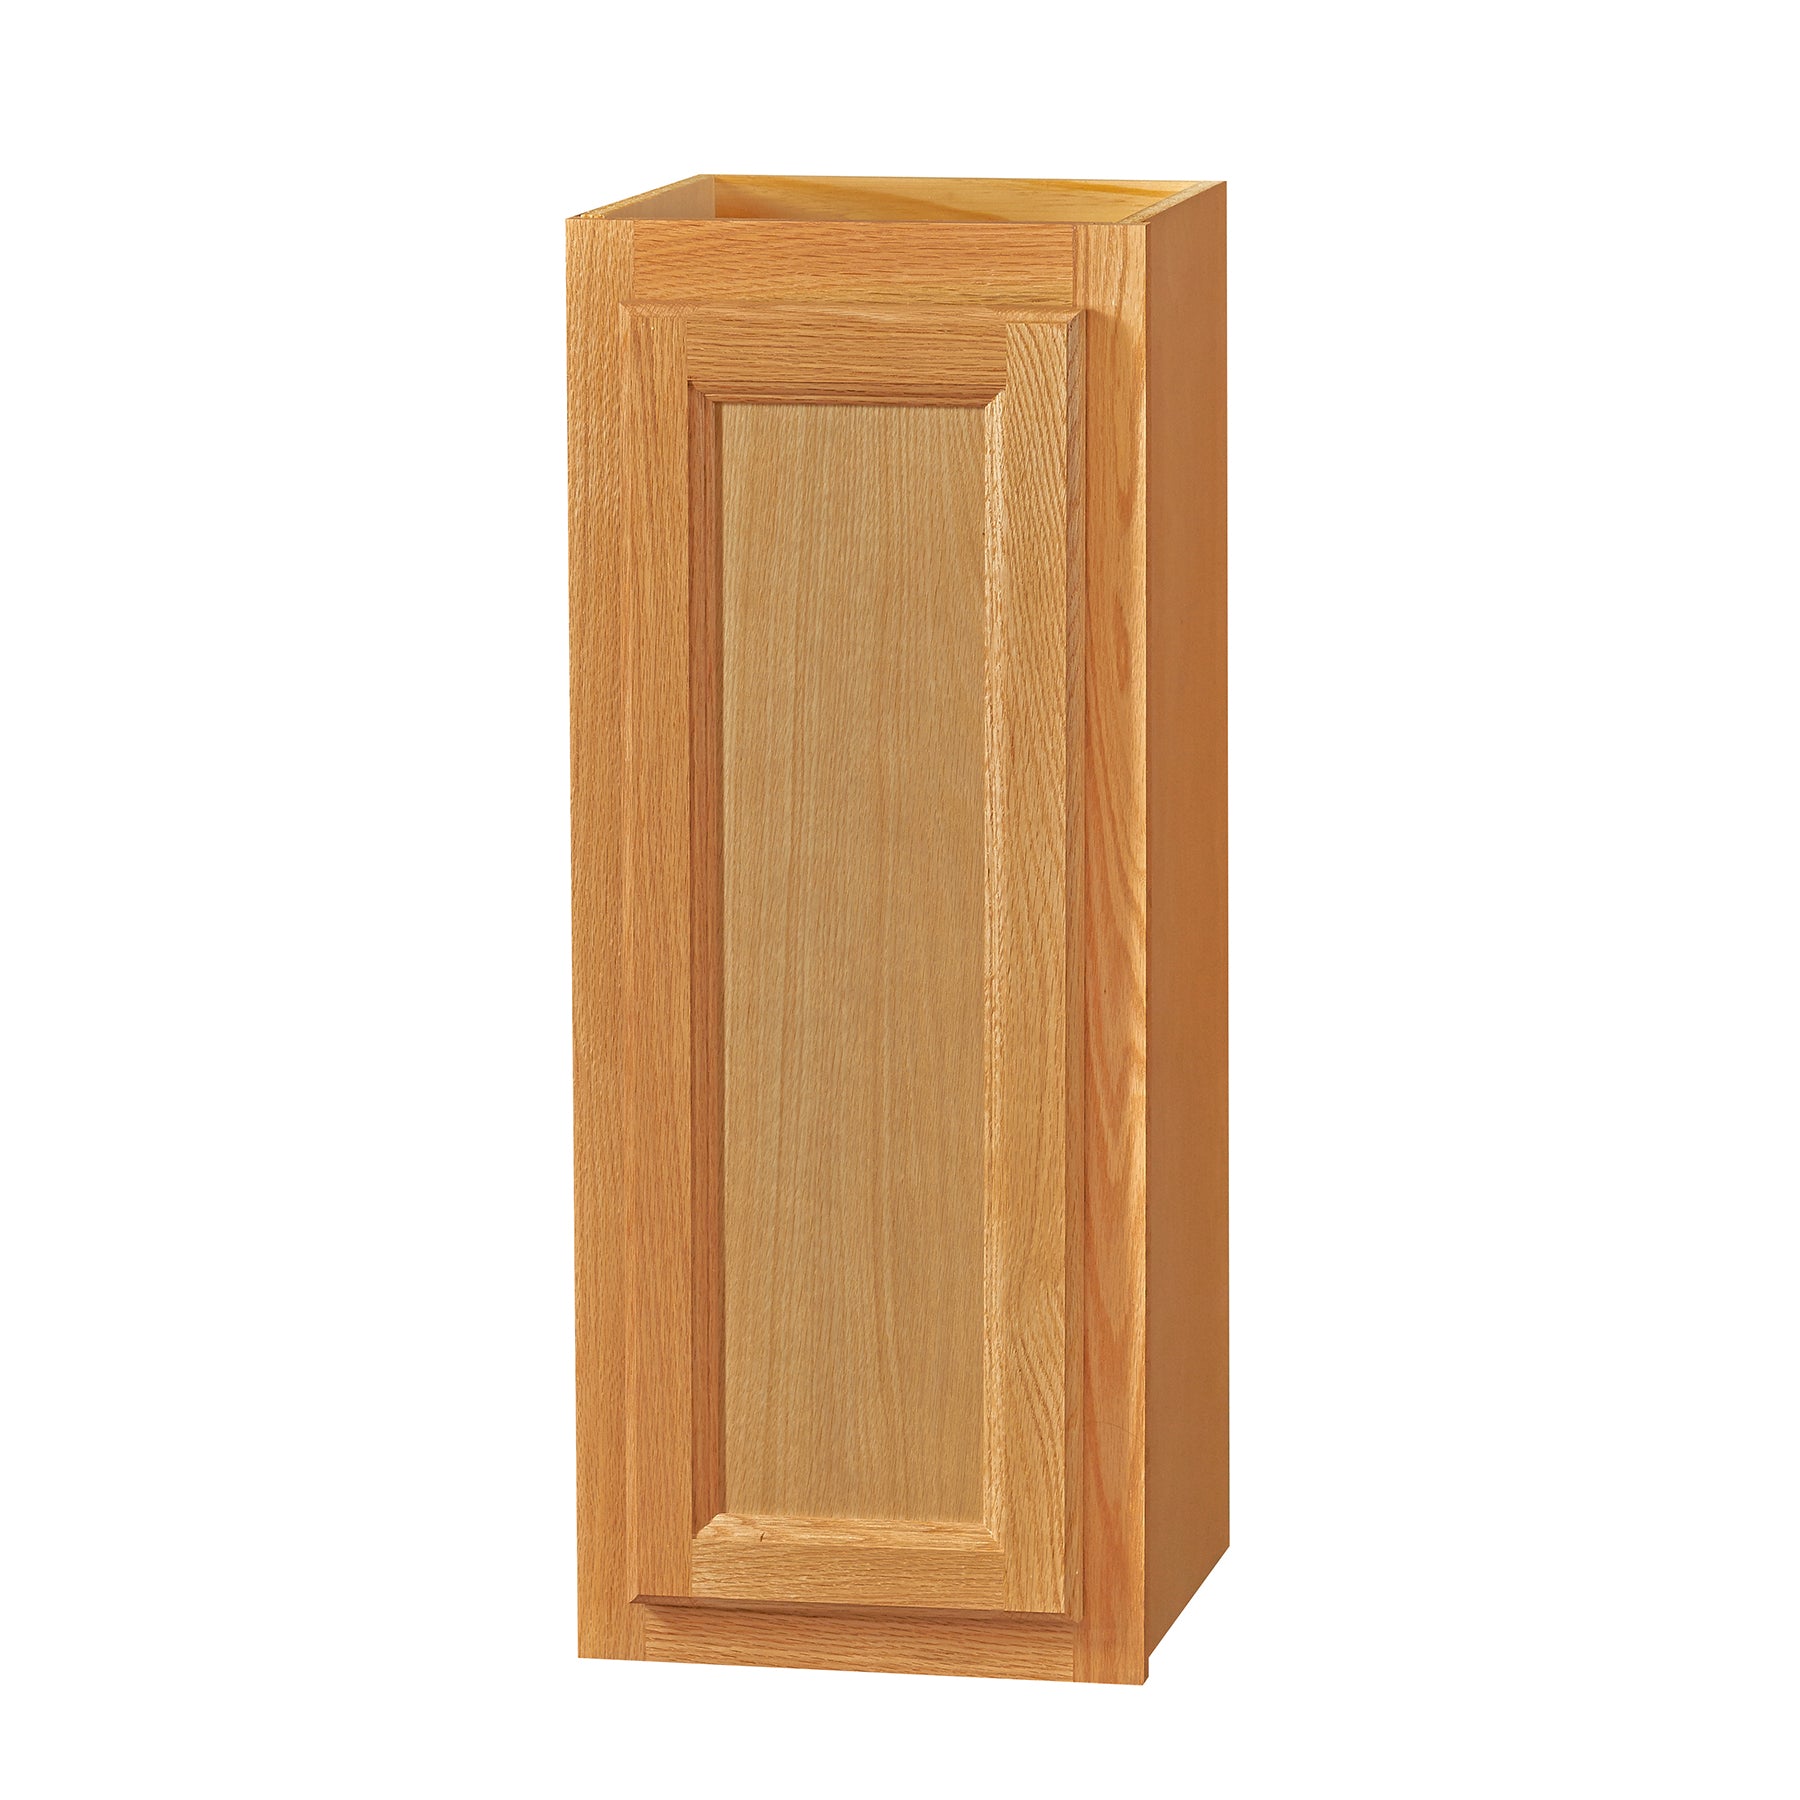 30 inch Wall Cabinets - Single Door - Chadwood Shaker - 12 Inch W x 30 Inch H x 12 Inch D